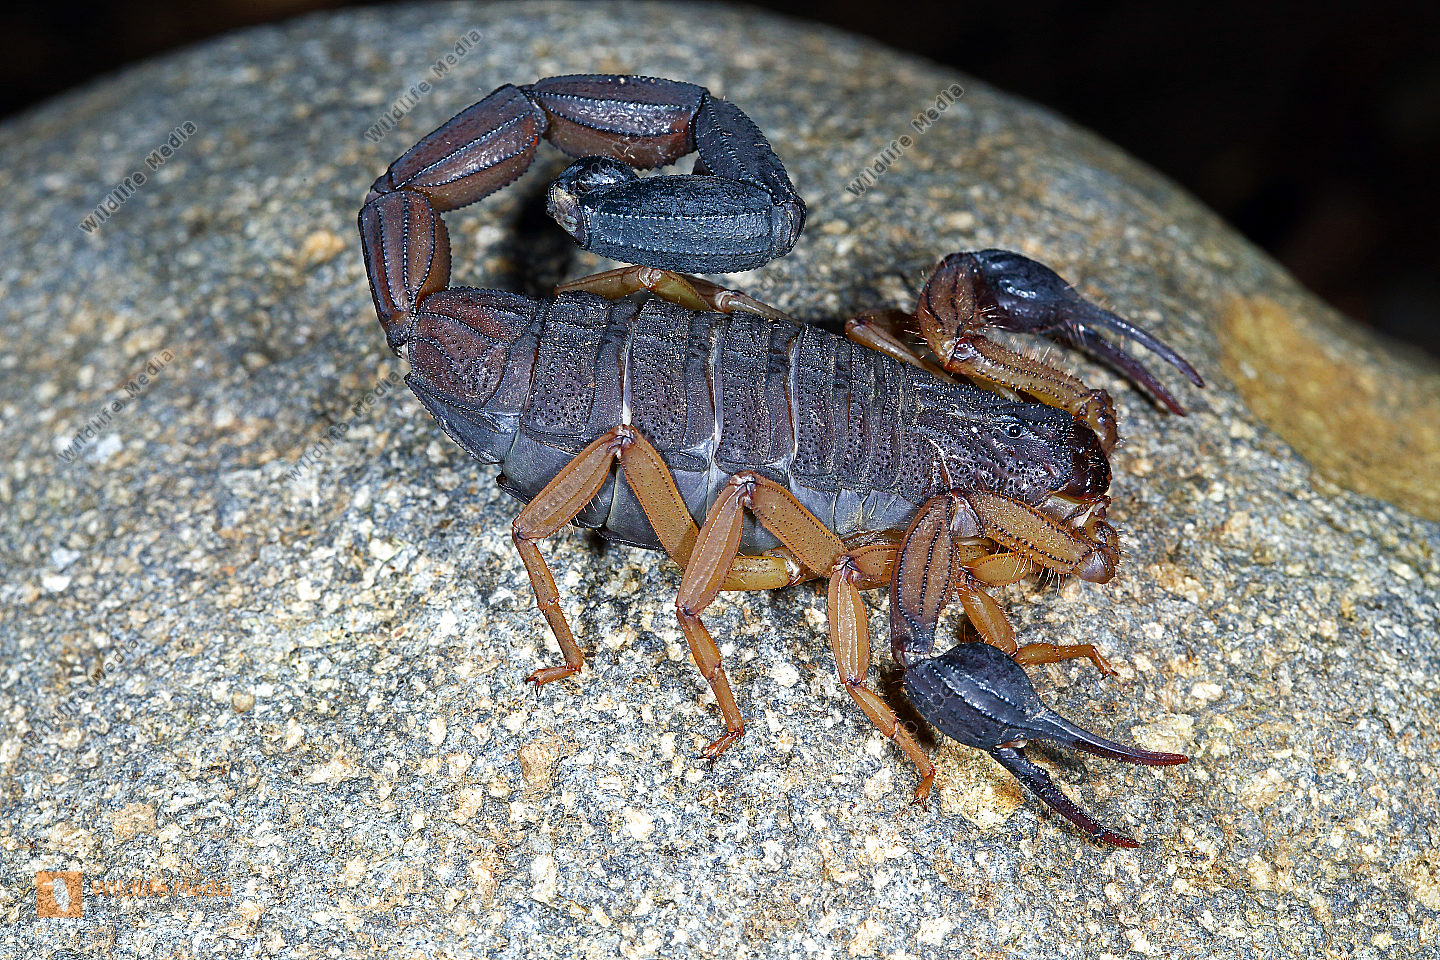 Skorpion bicolor